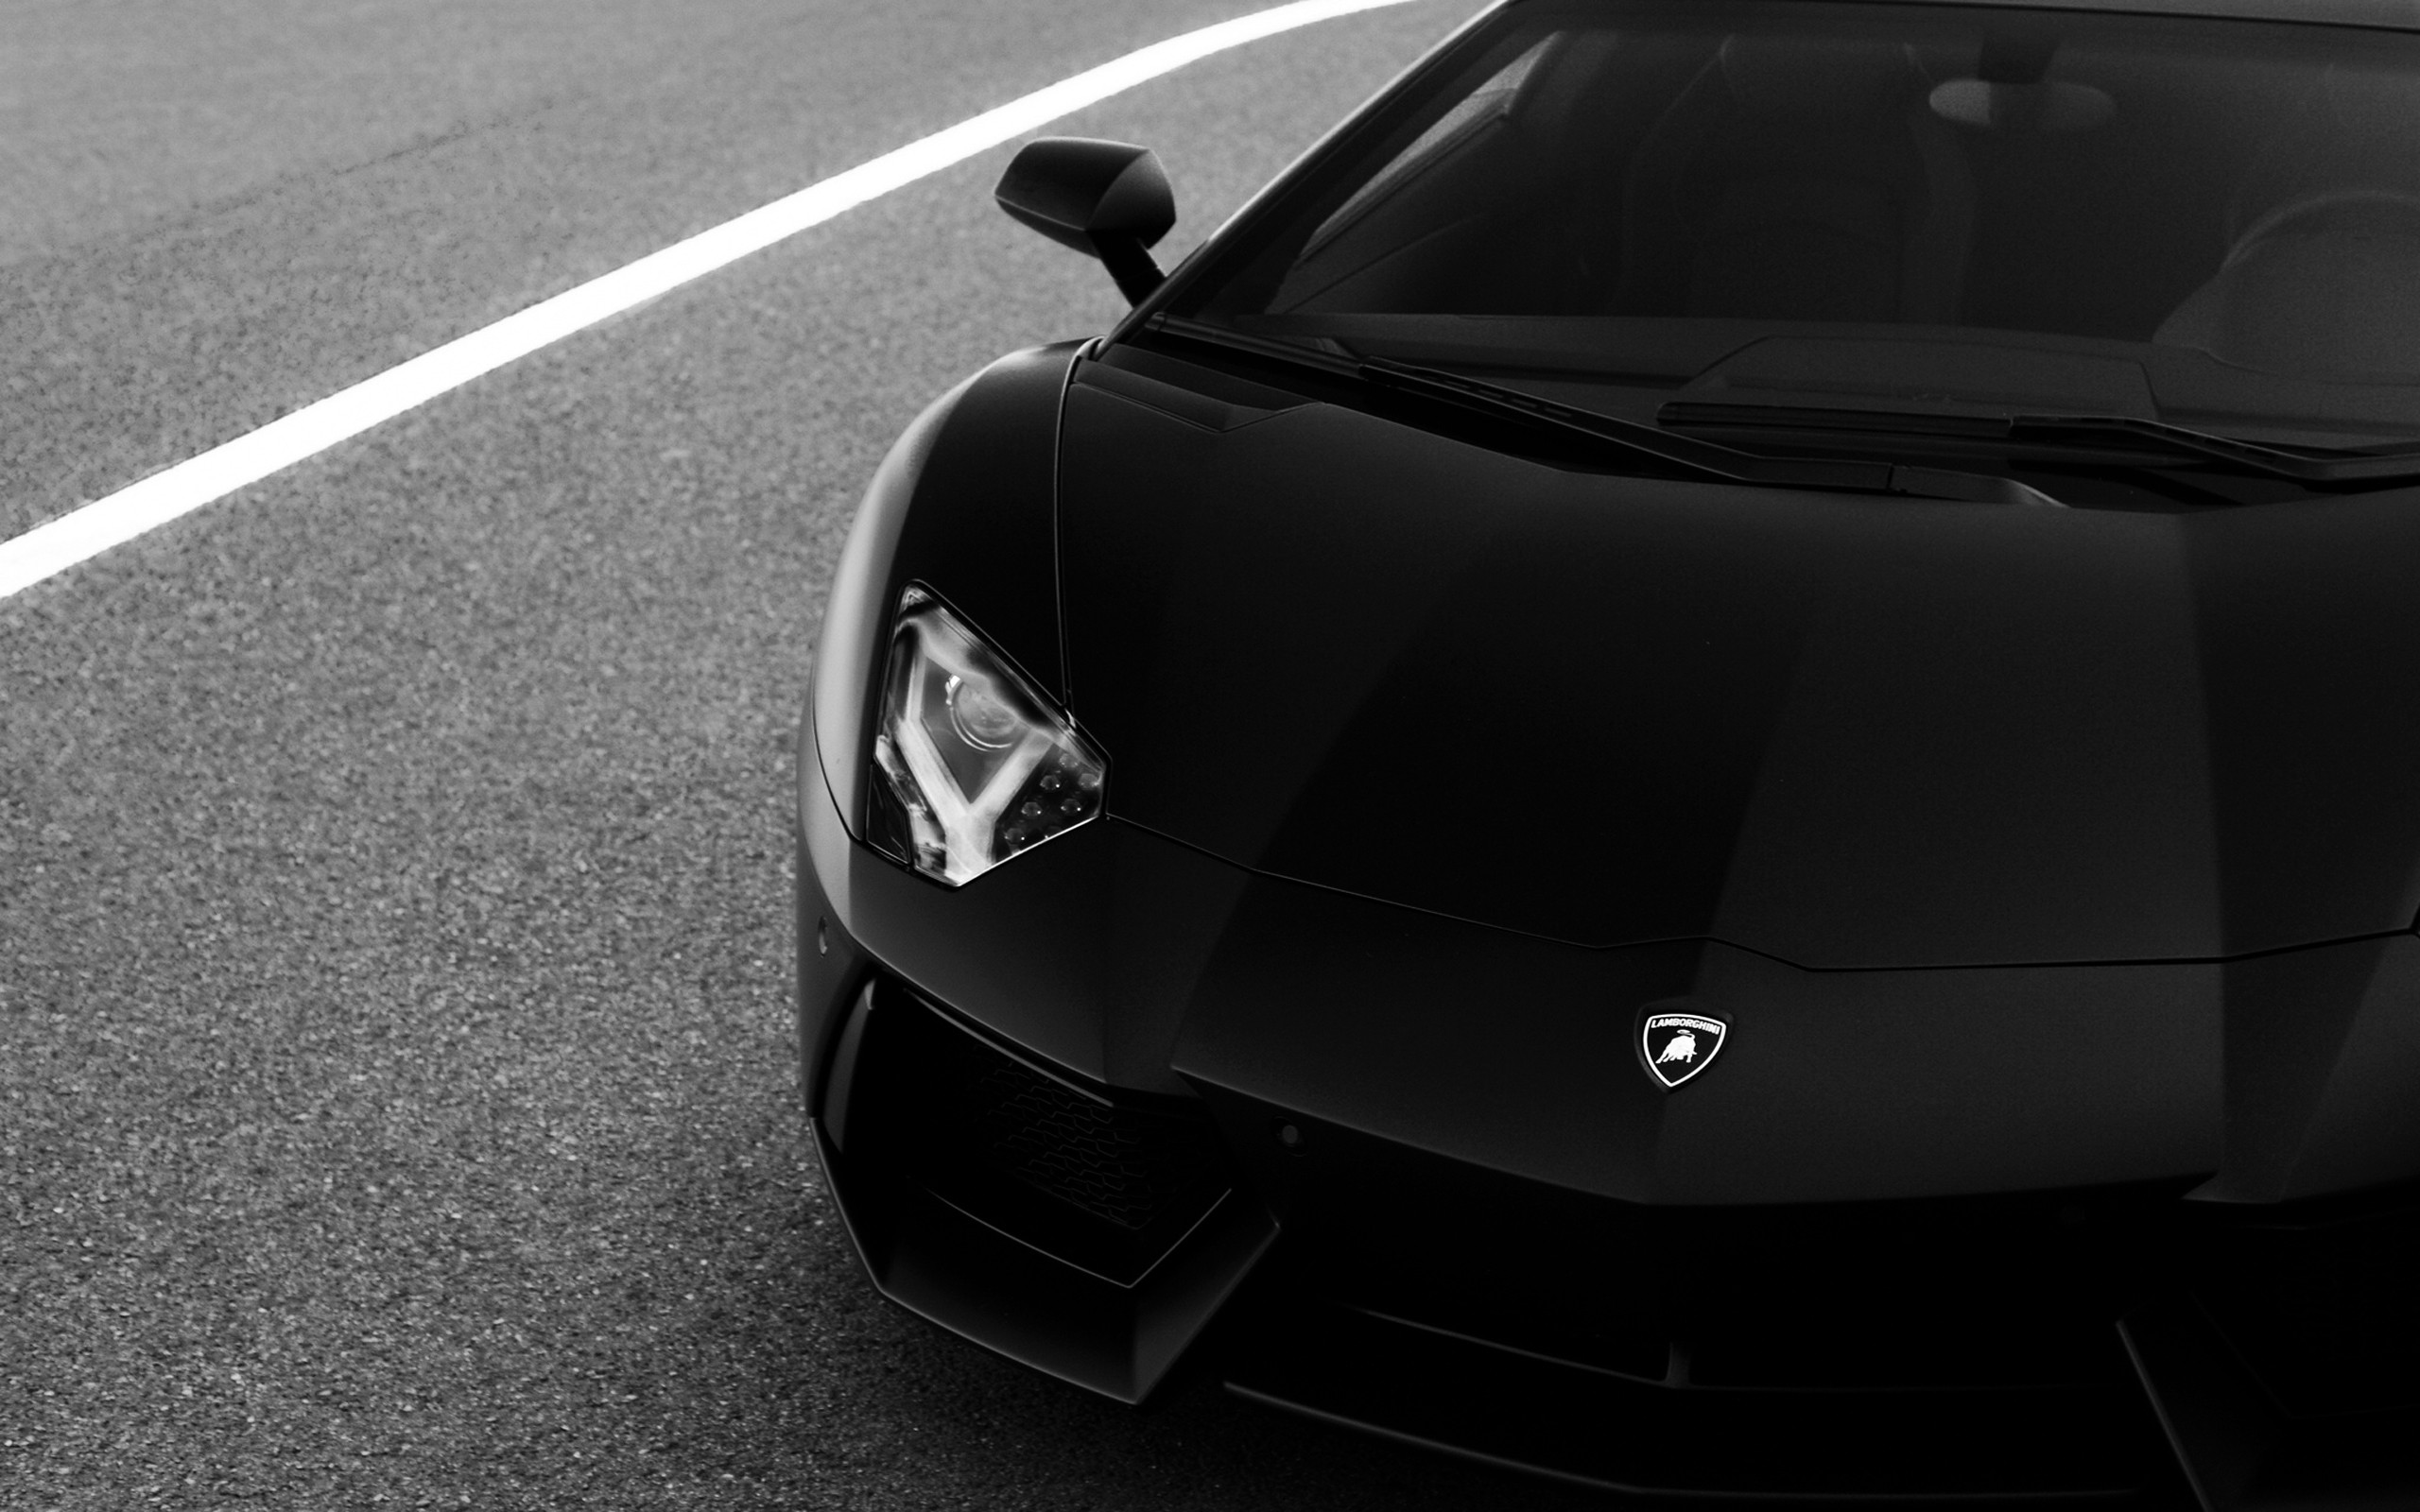 Laden Sie das Lamborghini, Autos, Lamborghini Aventador, Fahrzeuge, Schwarzes Auto-Bild kostenlos auf Ihren PC-Desktop herunter